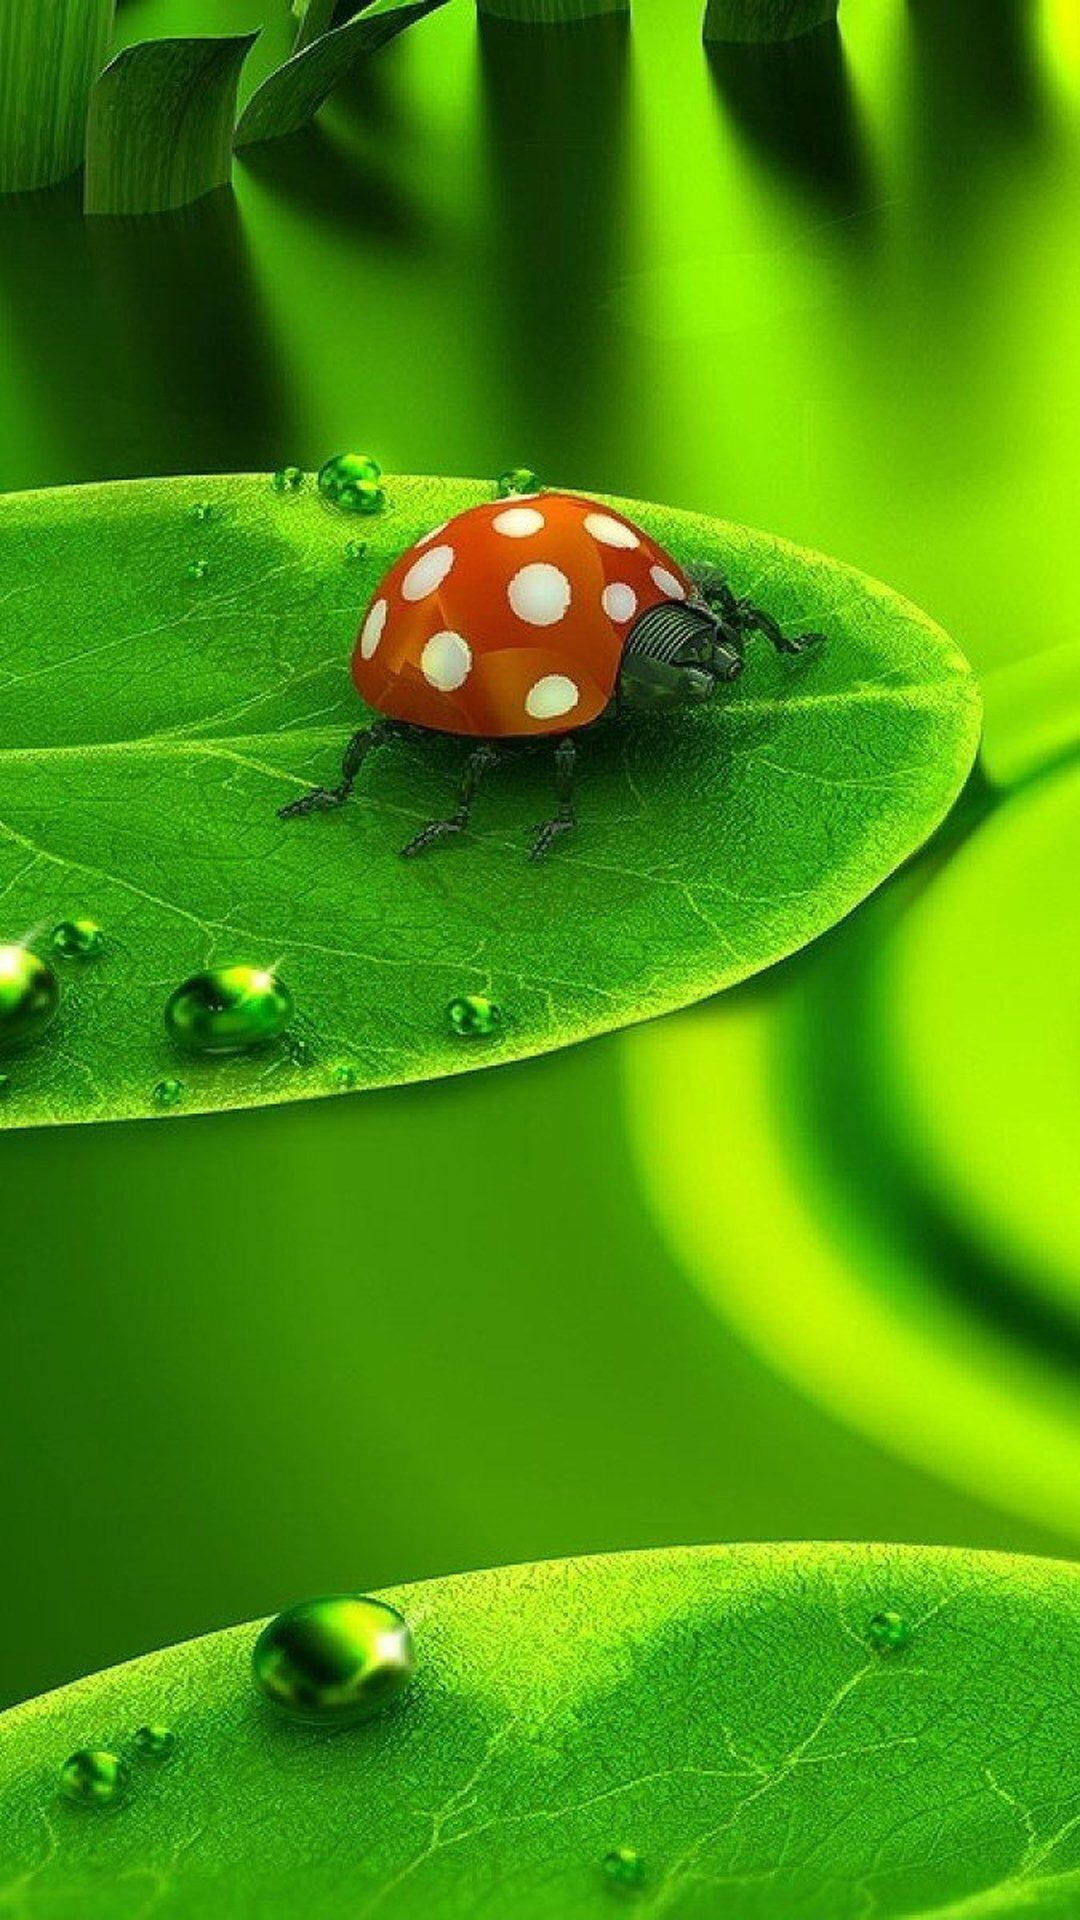 Ladybug Beetle With White Spots Background